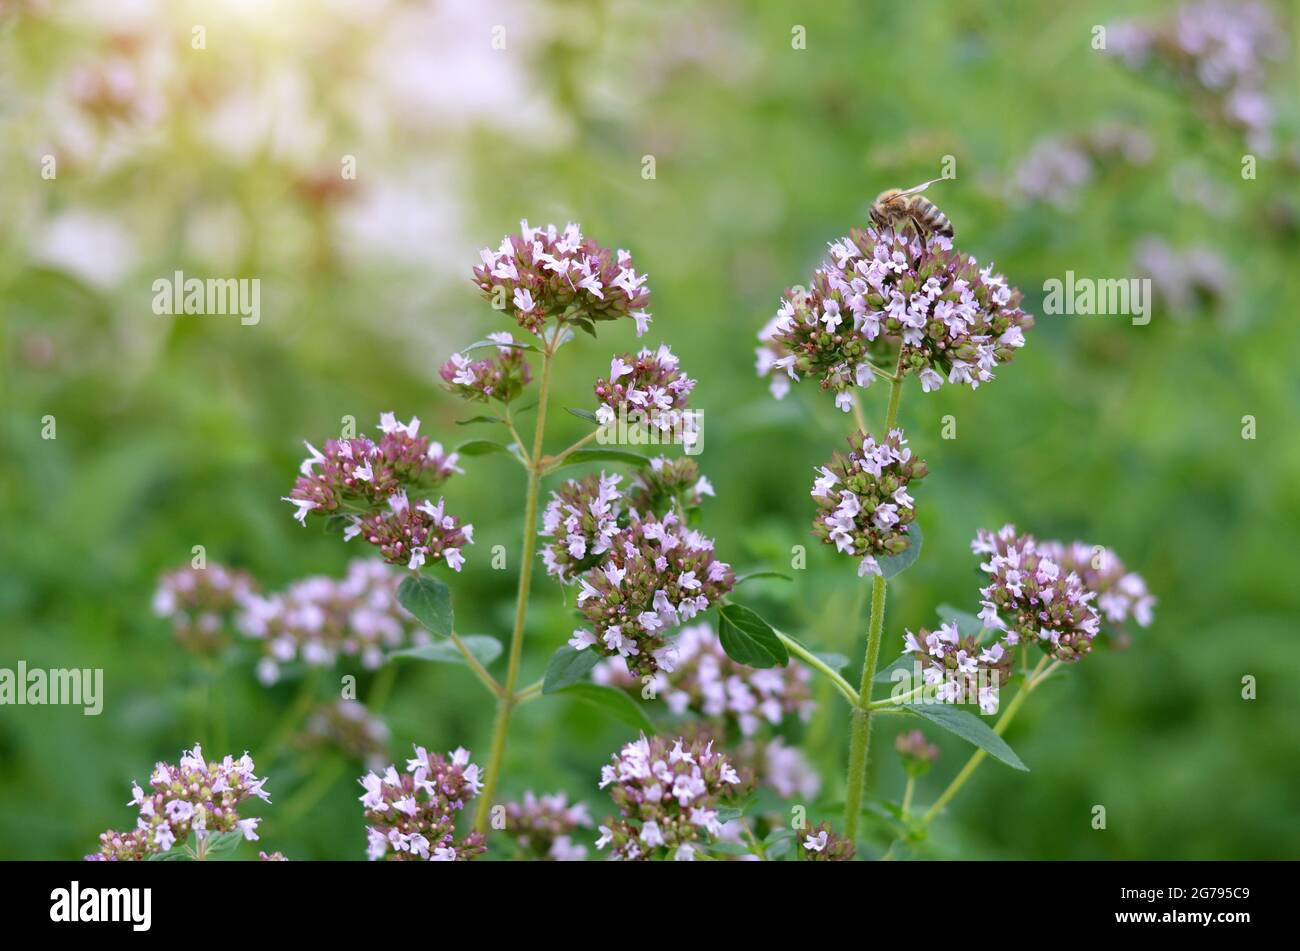 Honey bee pollinate flowers of origanum vulgare growing in a meadow, selective focus. Stock Photo